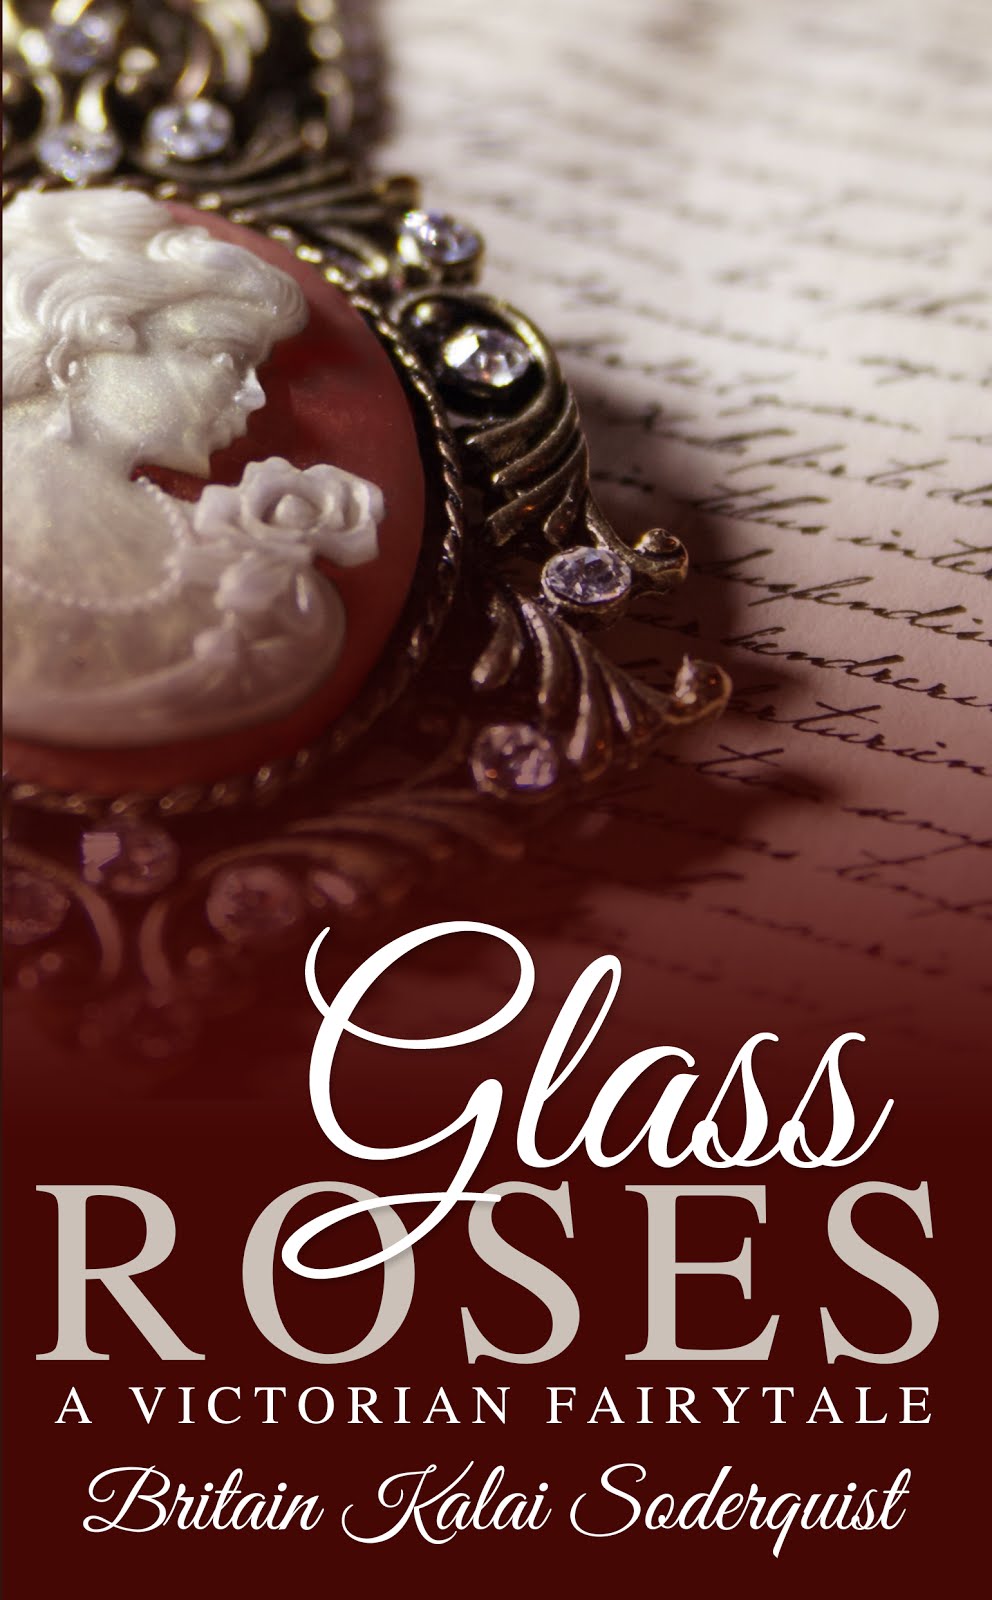 "Glass Roses" on Amazon